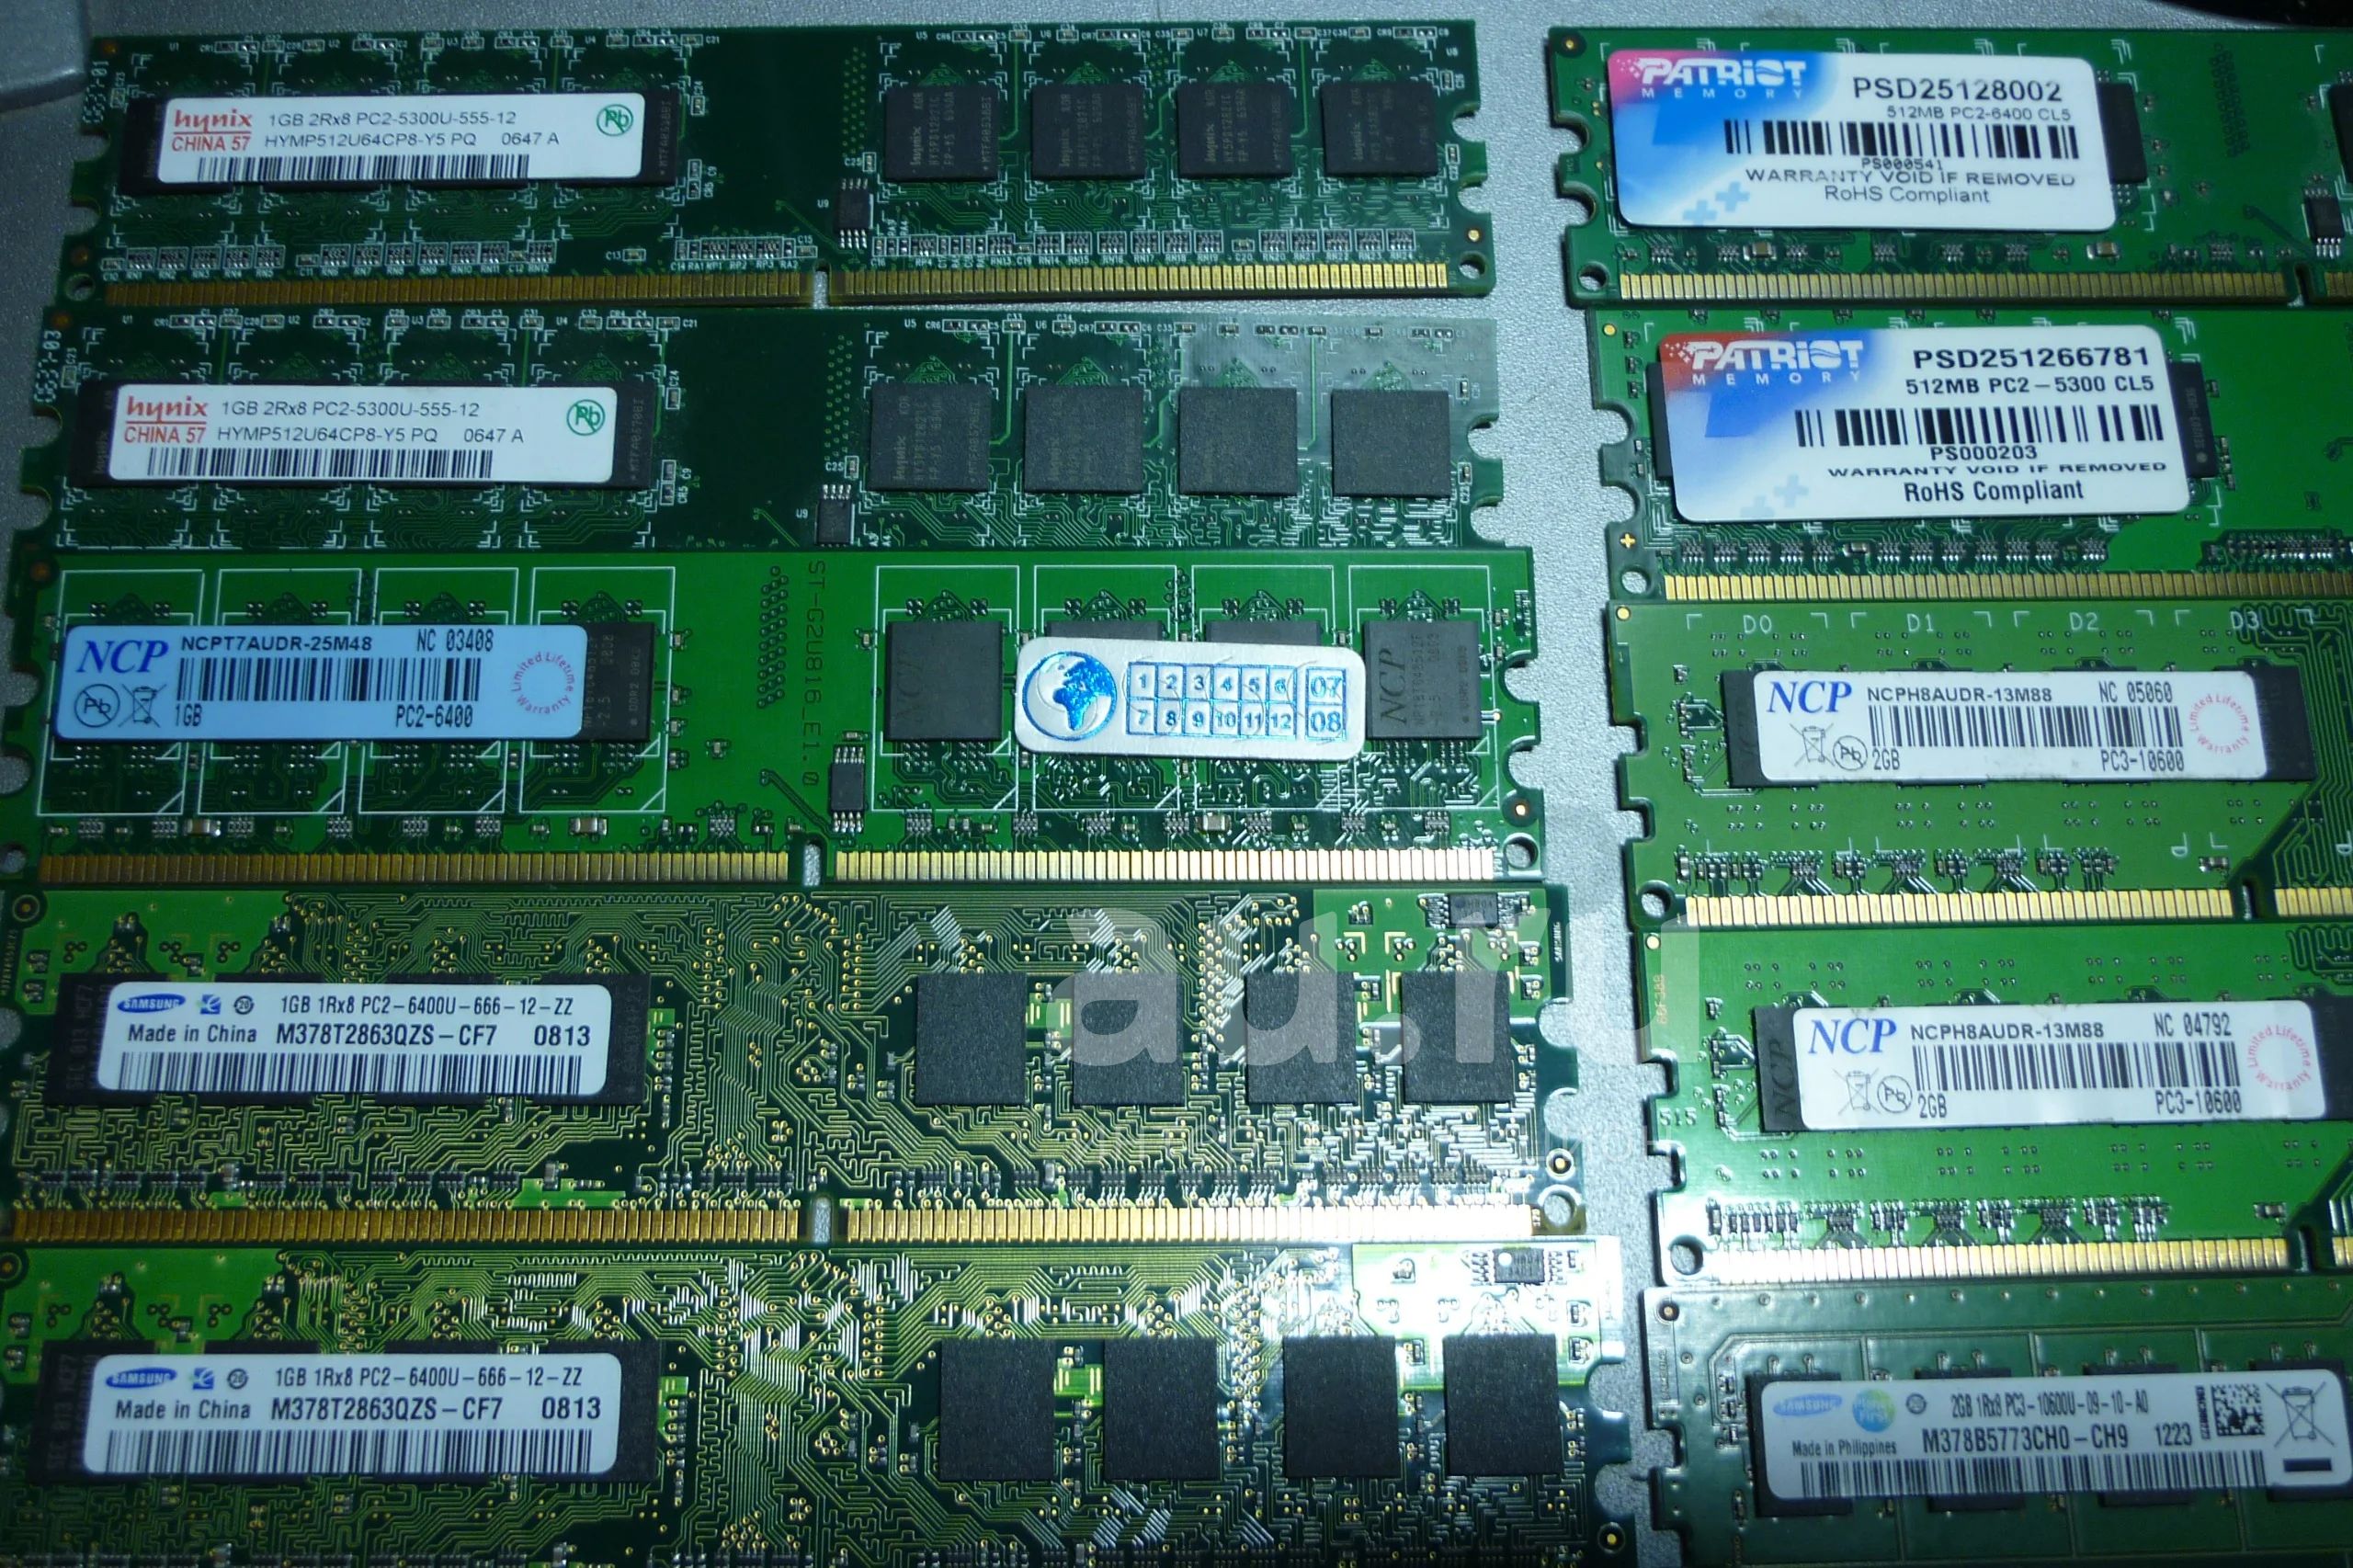 Планка оперативной памяти на 128 ГБ. Gfkyrf оперативной памяти. Адаптер на две планки памяти. Принтер 2550l нет планки памяти.